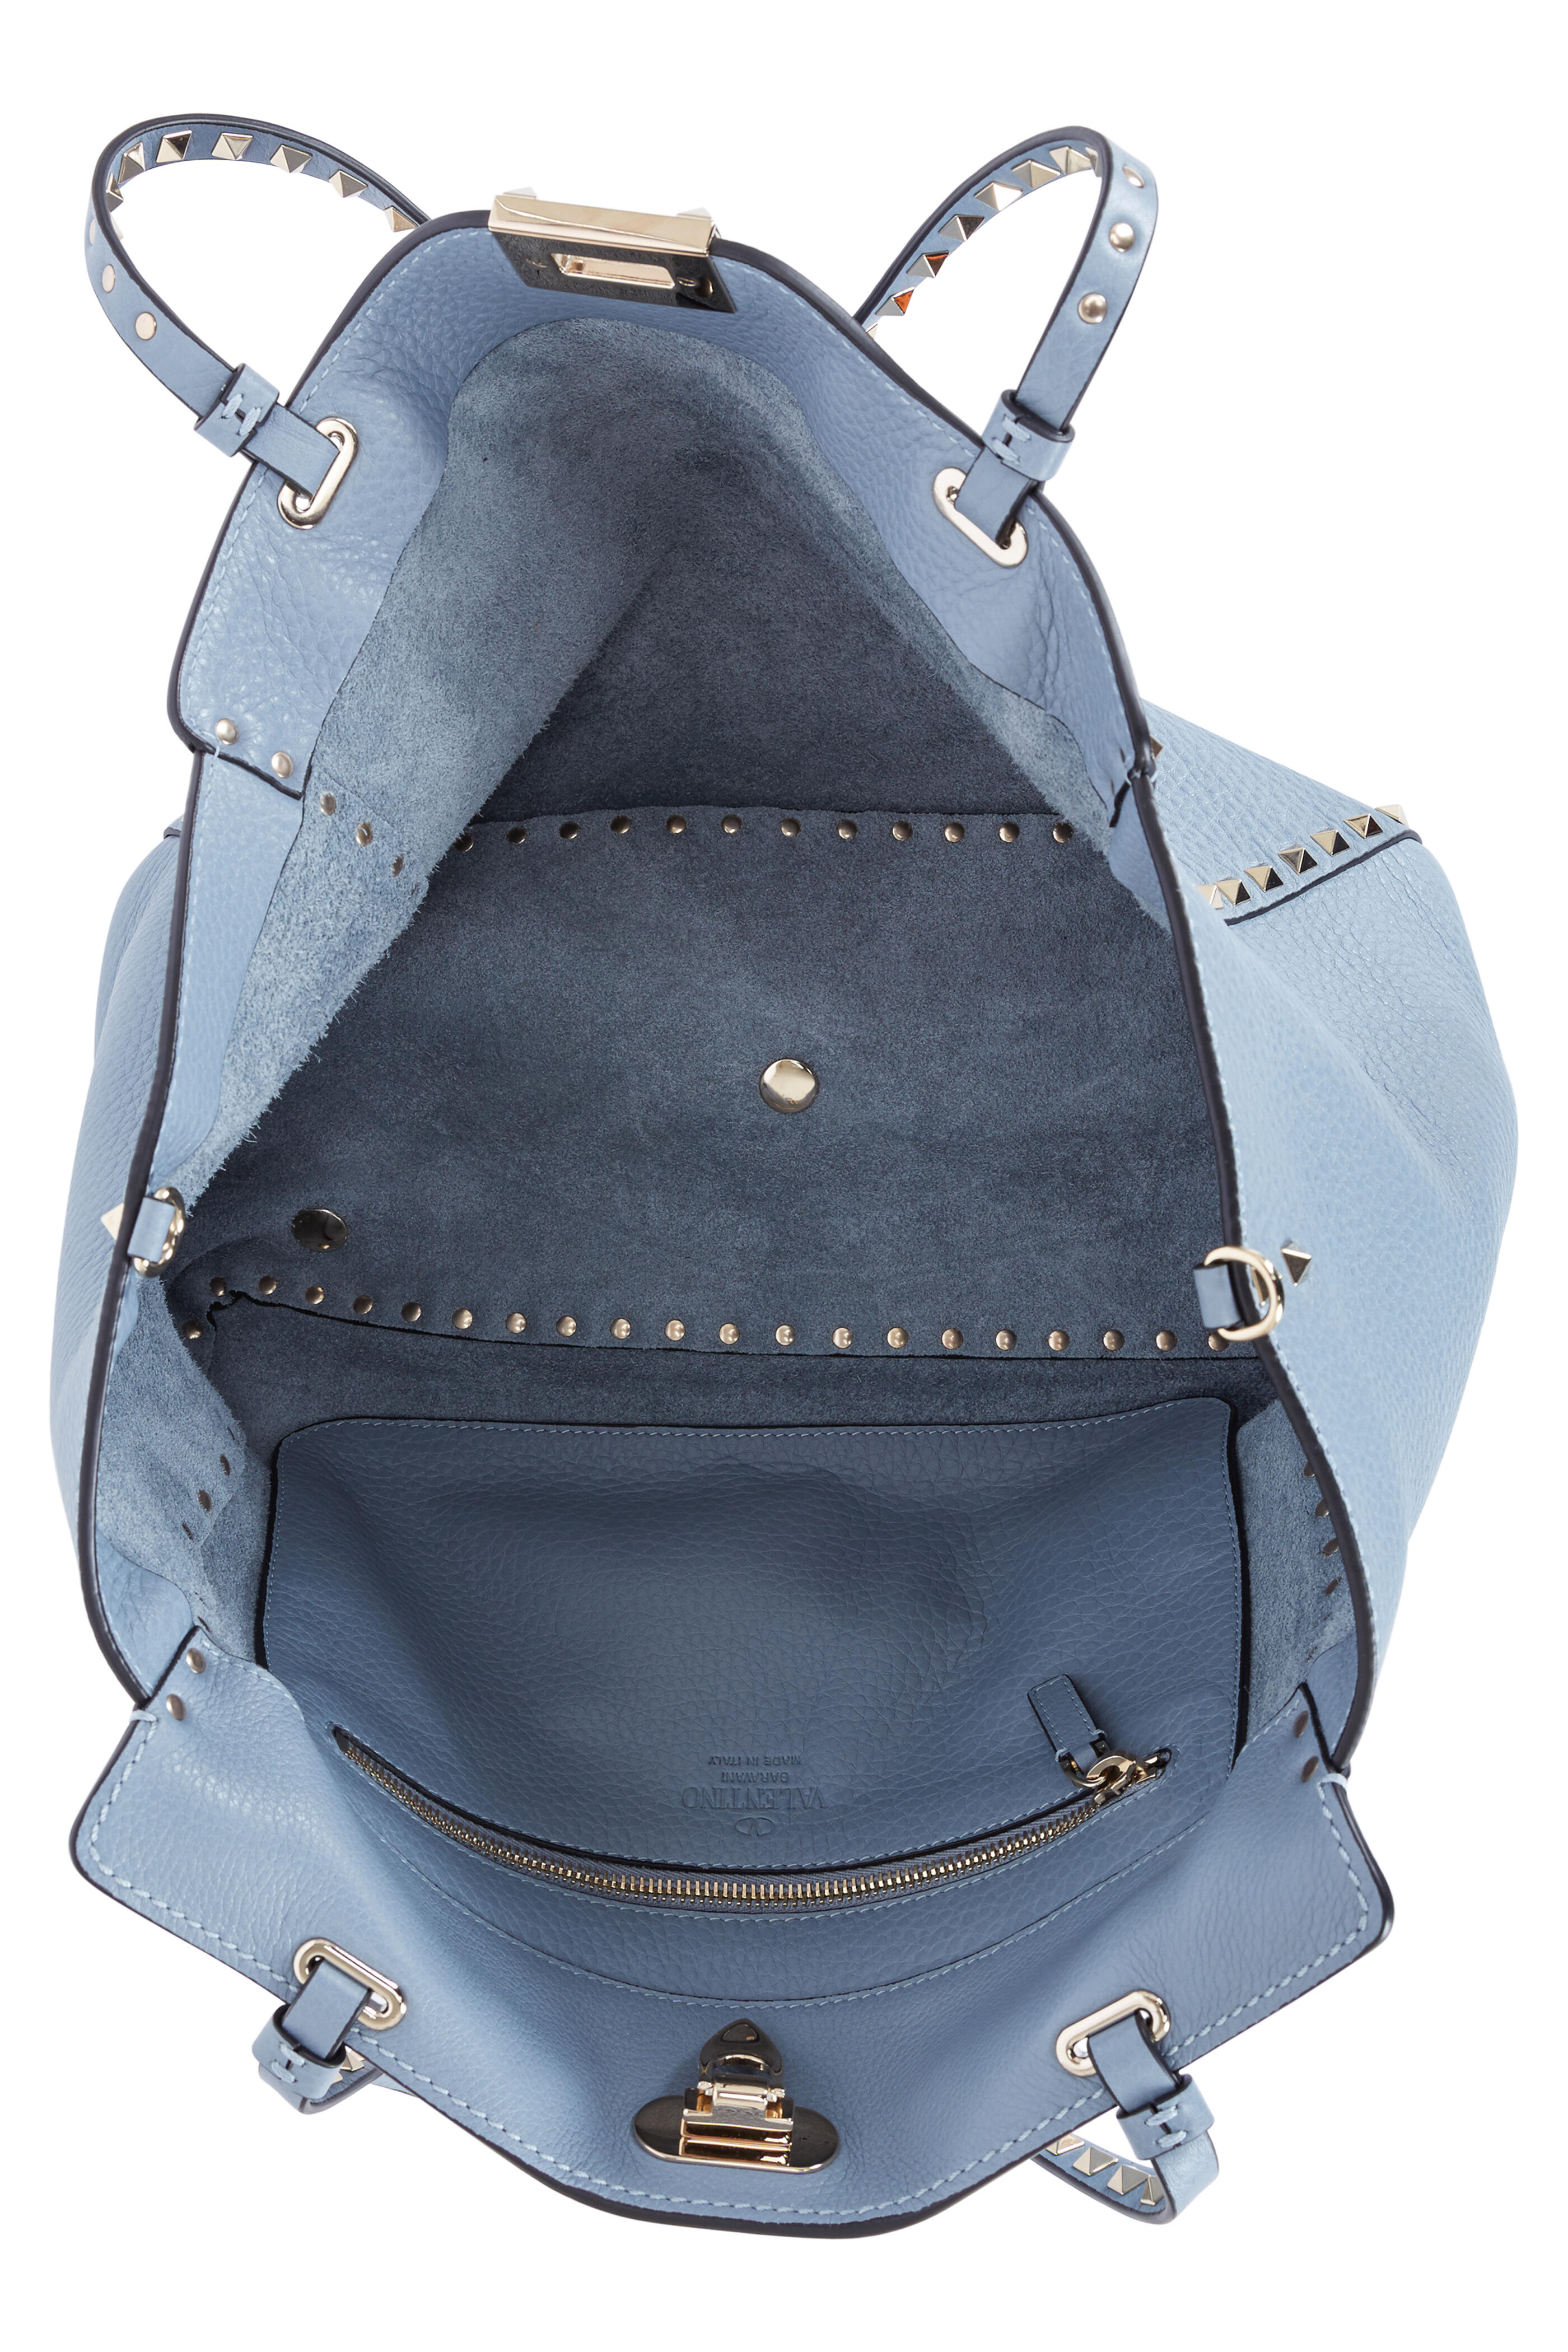 Valentino Blue Leather Medium Rockstud Backpack Valentino